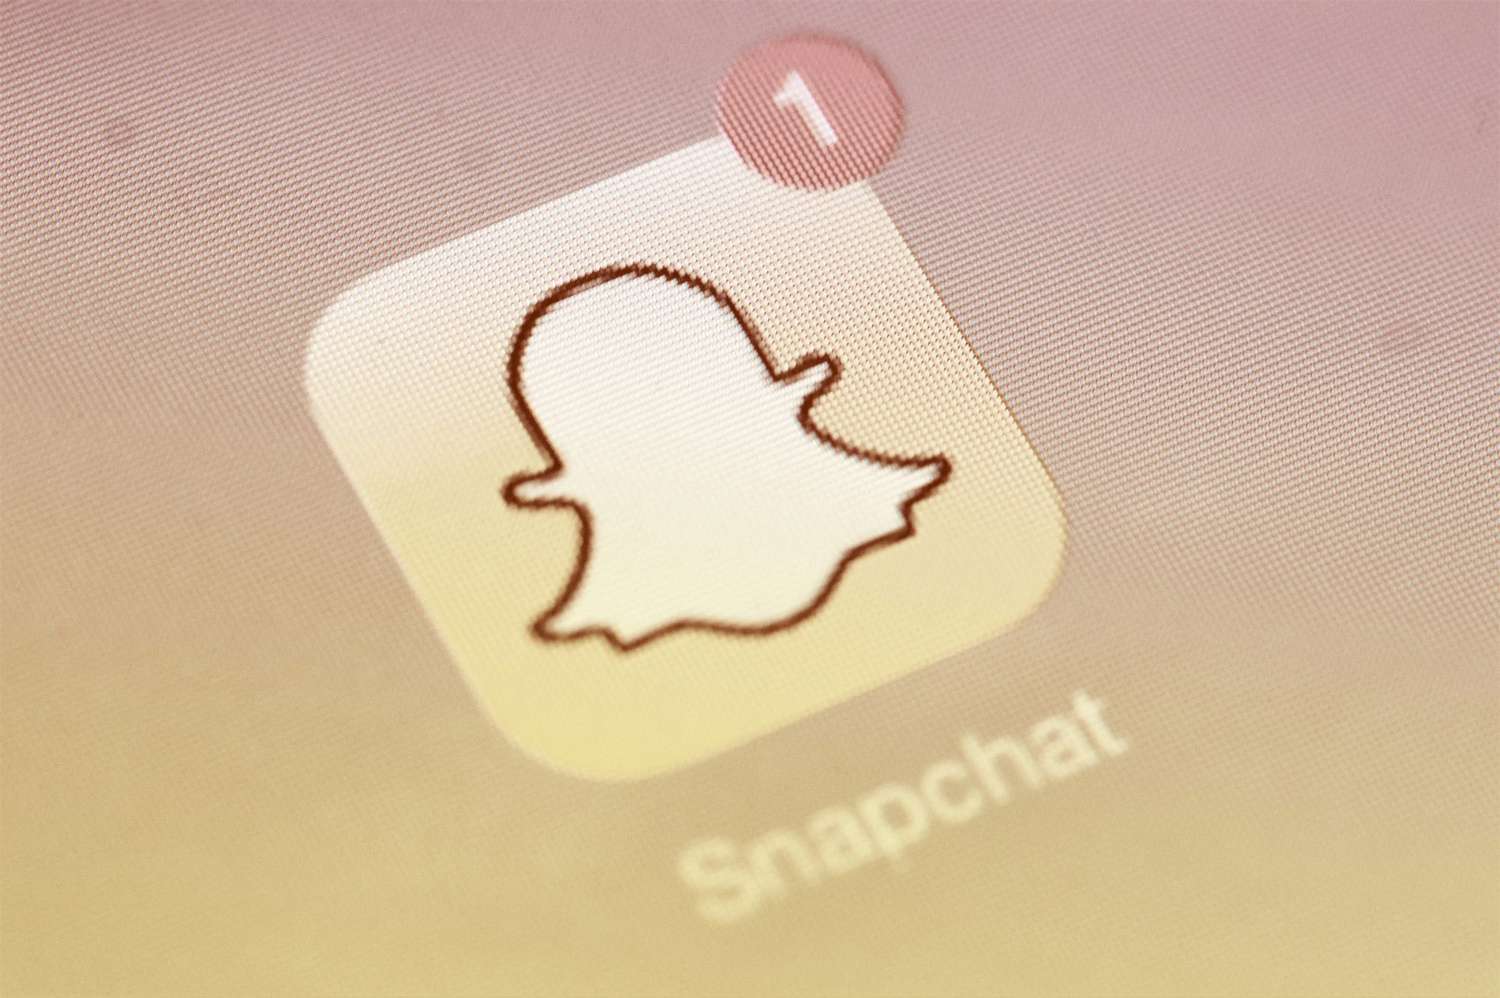 Snapchat logo wth a notification